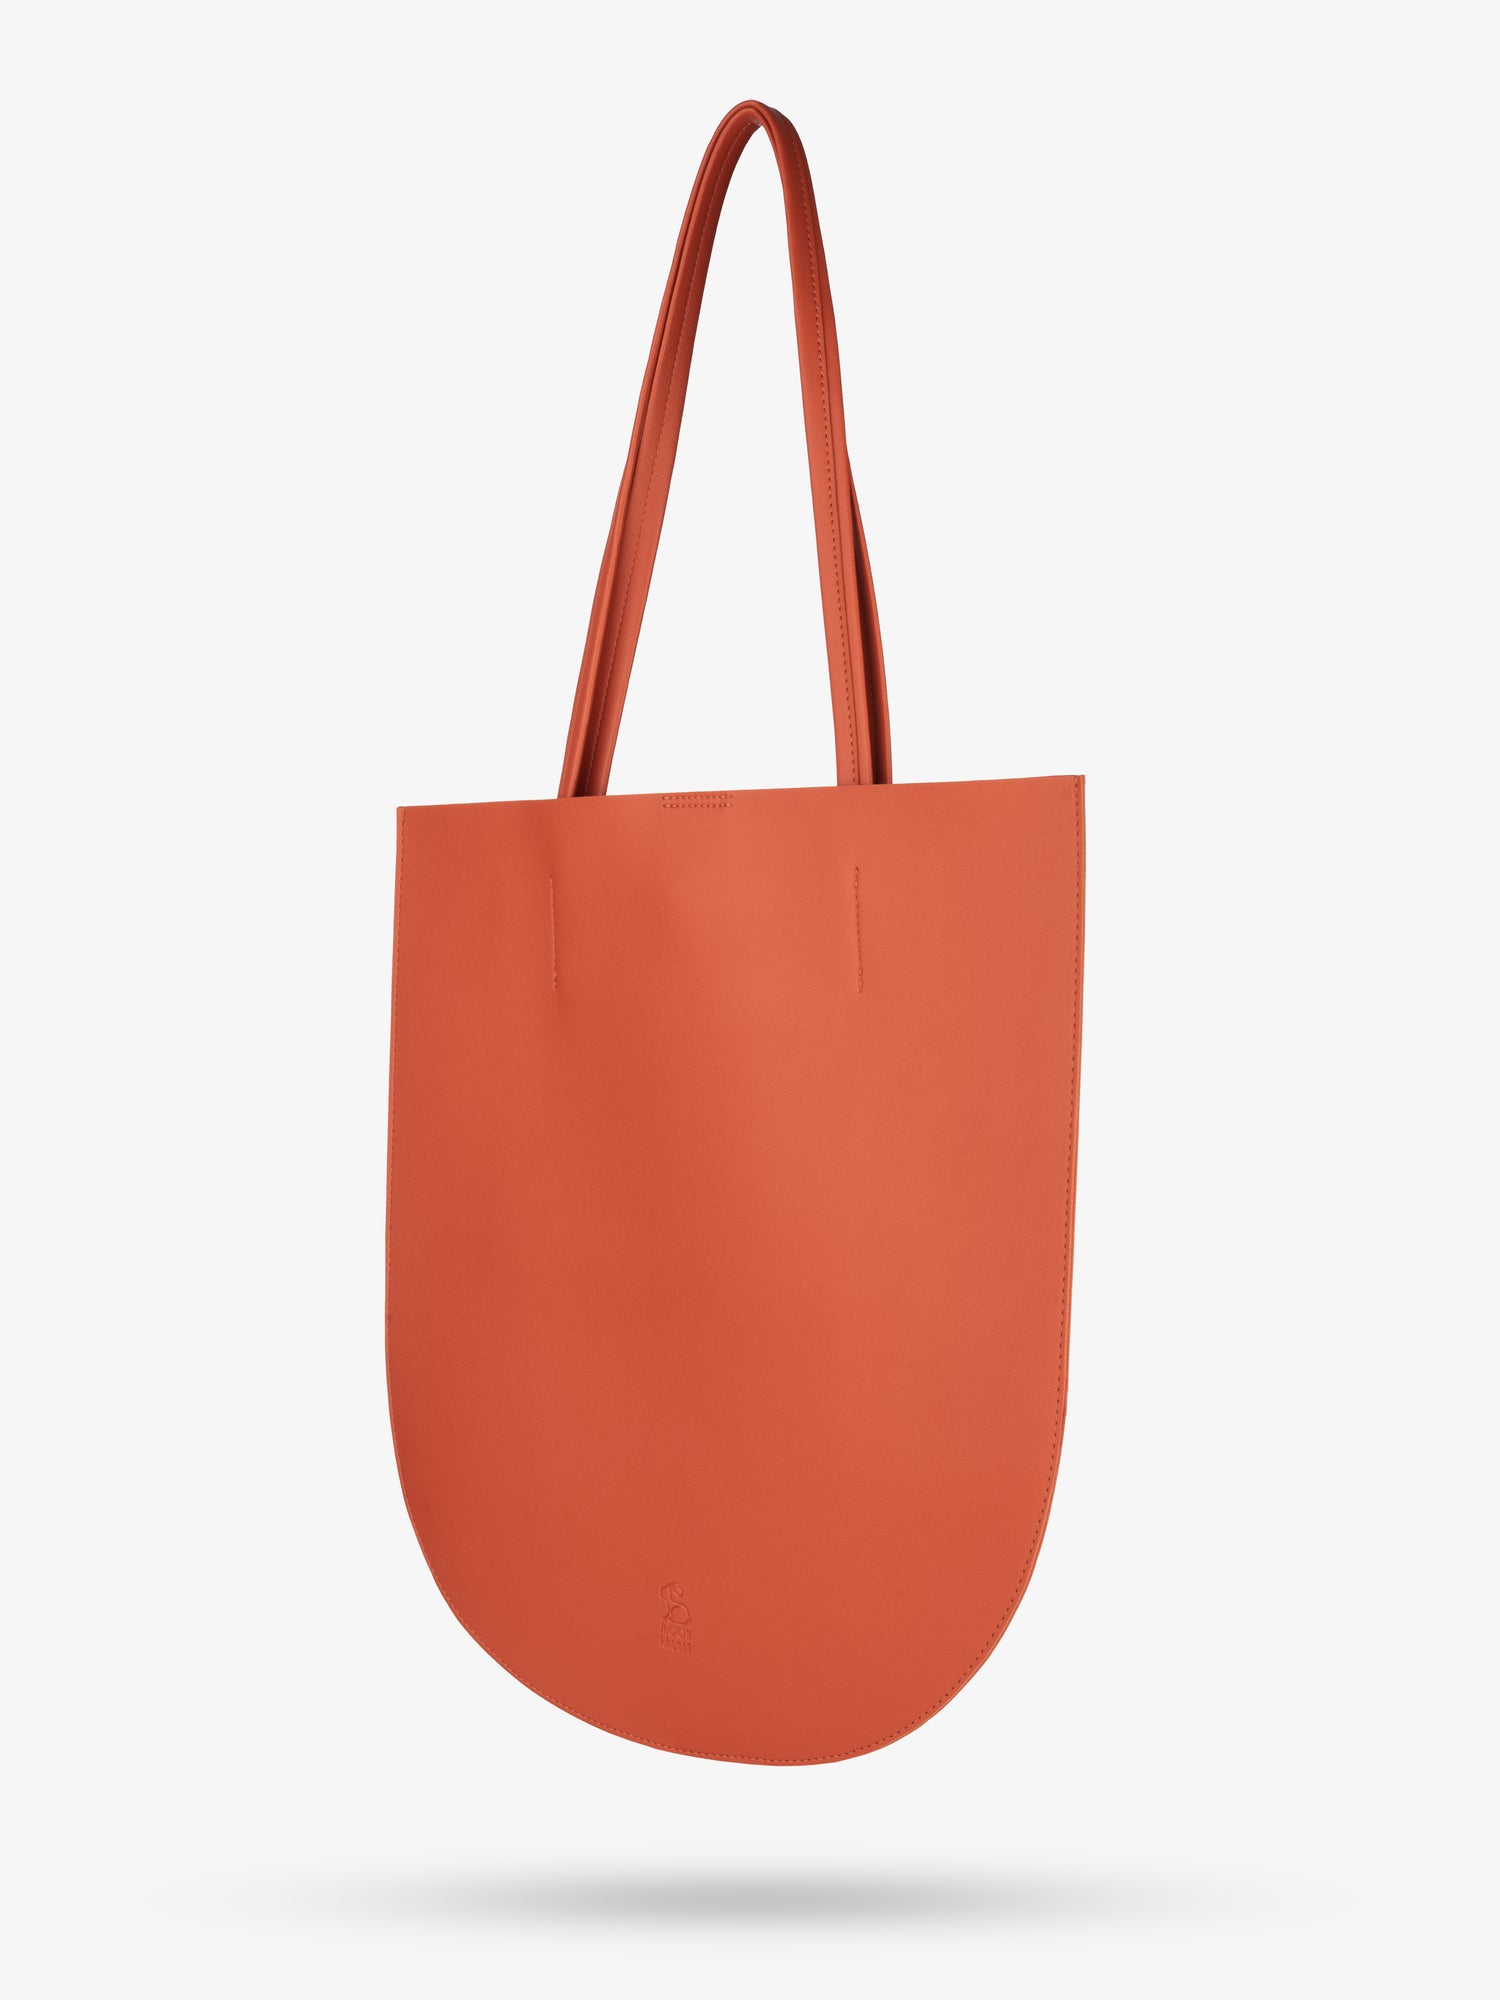 tote handbags for women